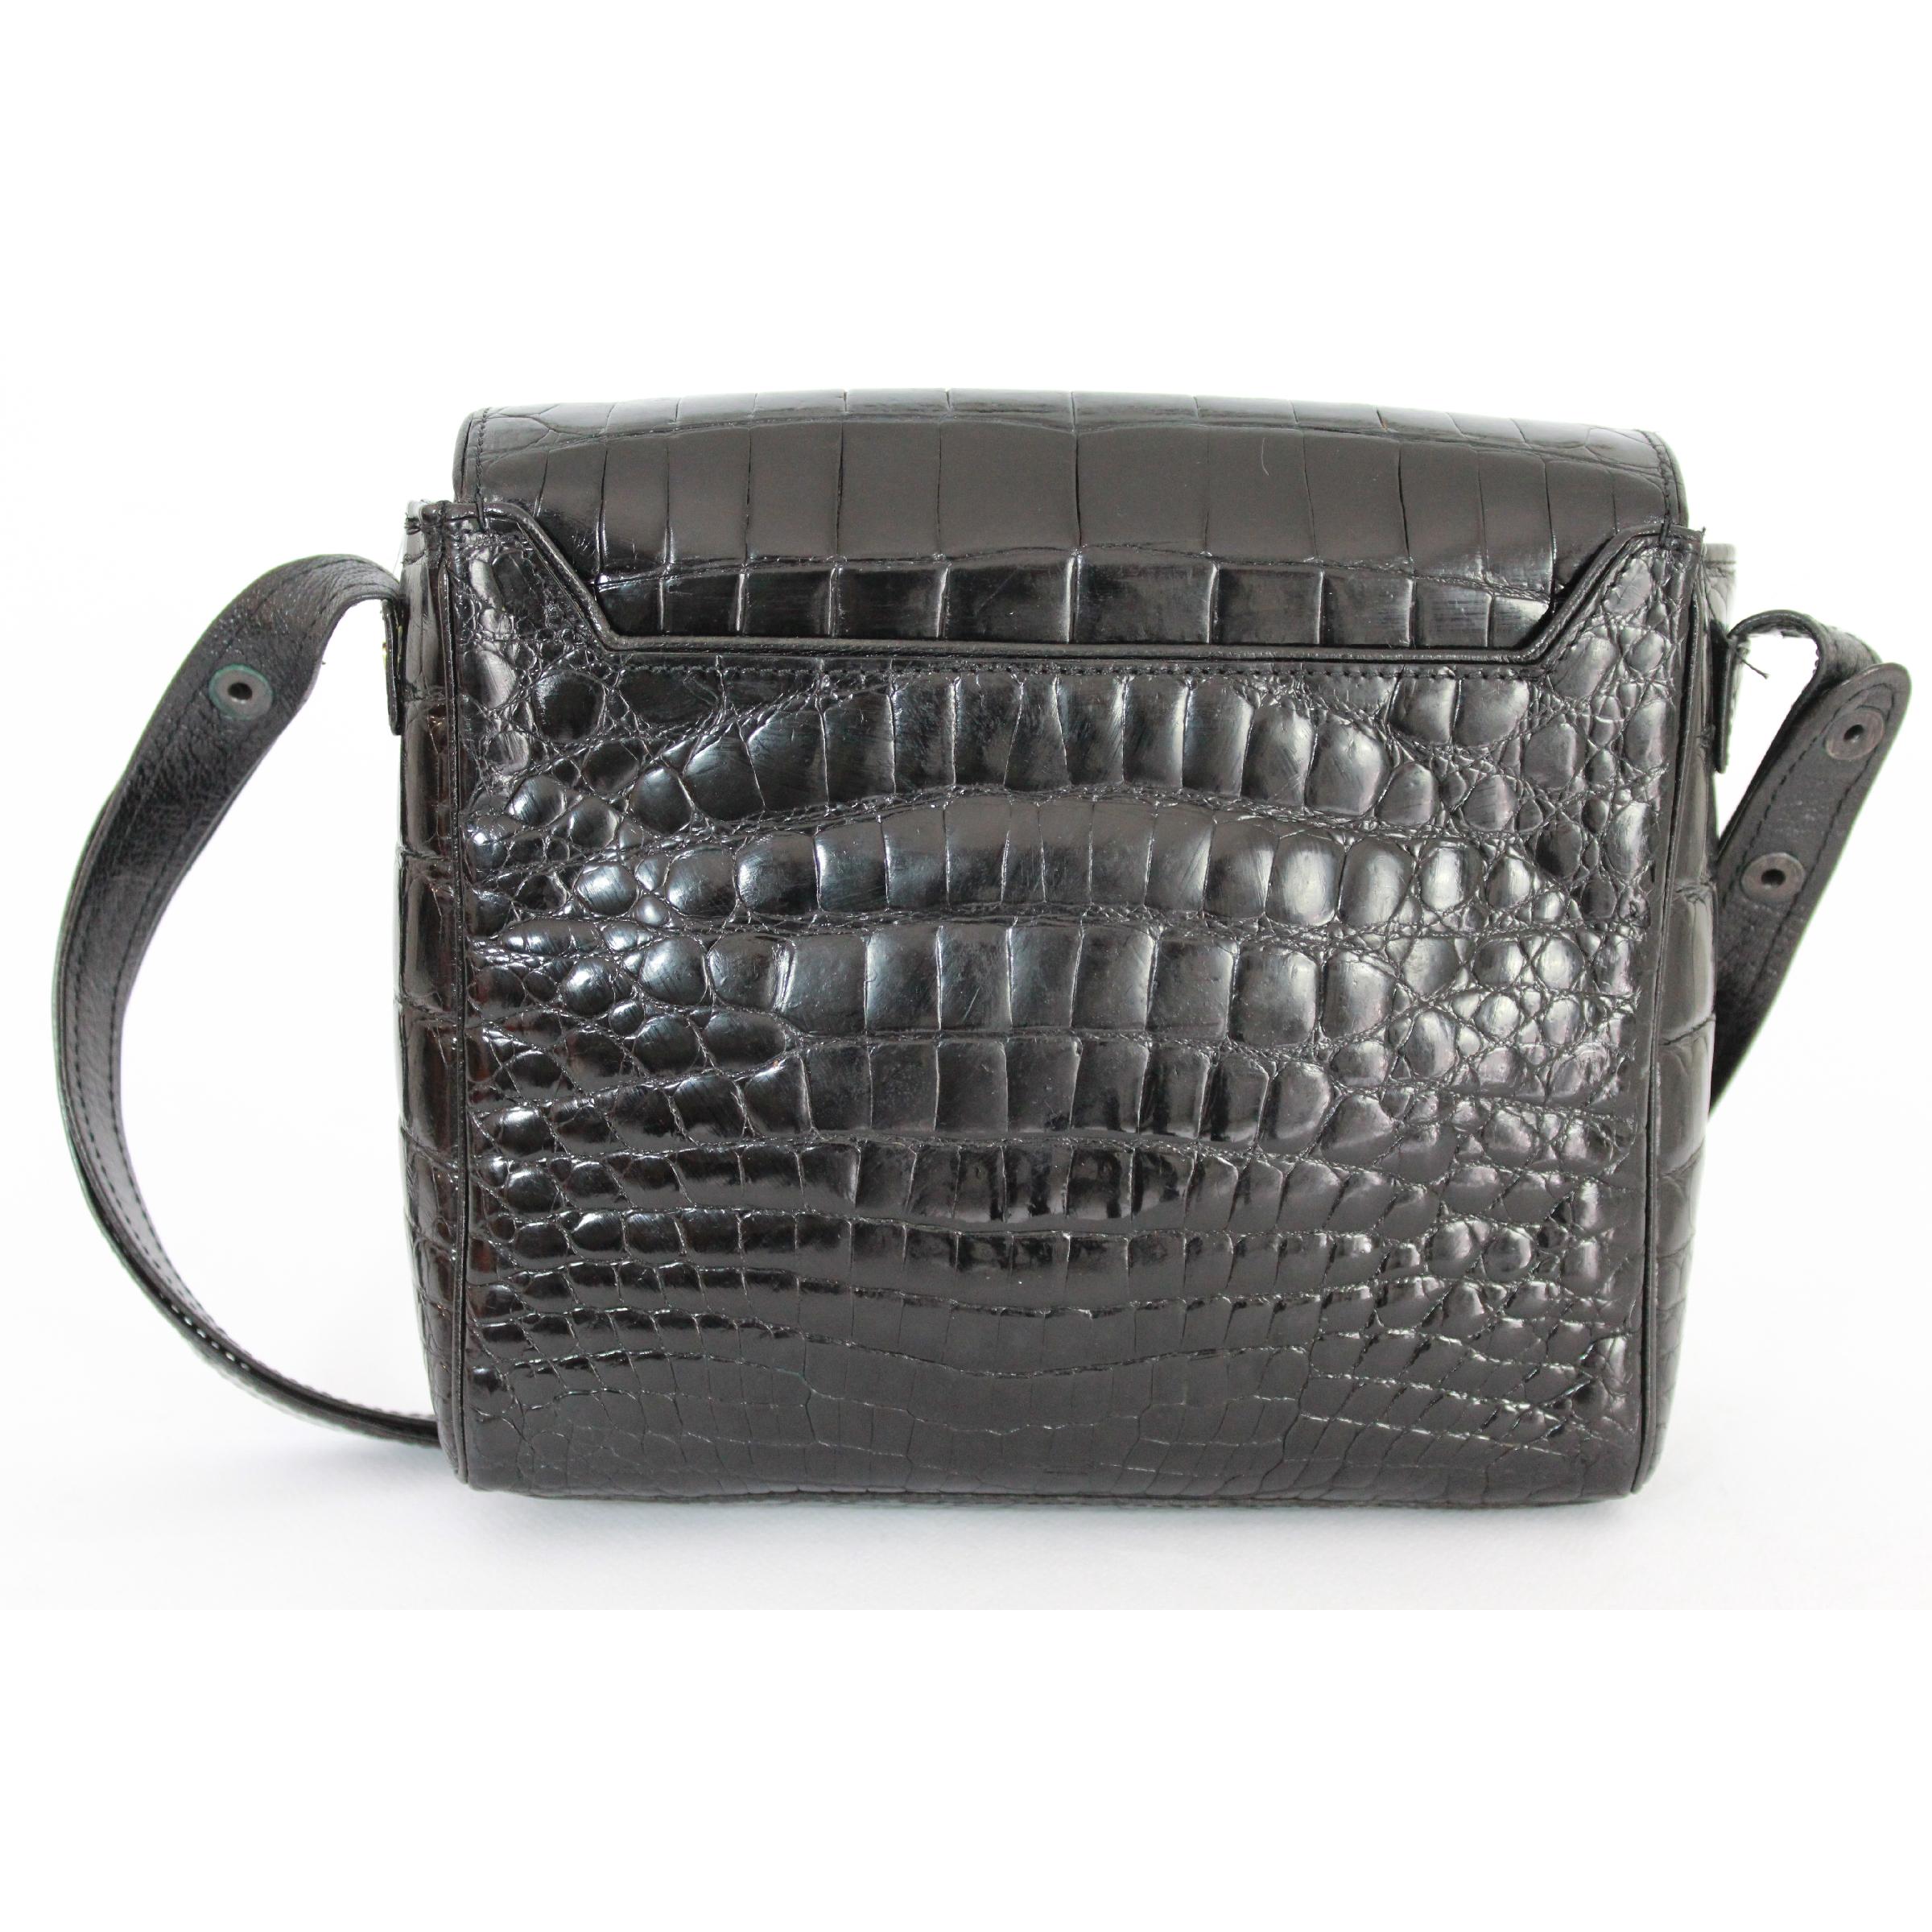 Fendi Black Leather Crocodile Print Shoulder Bag 1970s Vintage In Excellent Condition For Sale In Brindisi, Bt